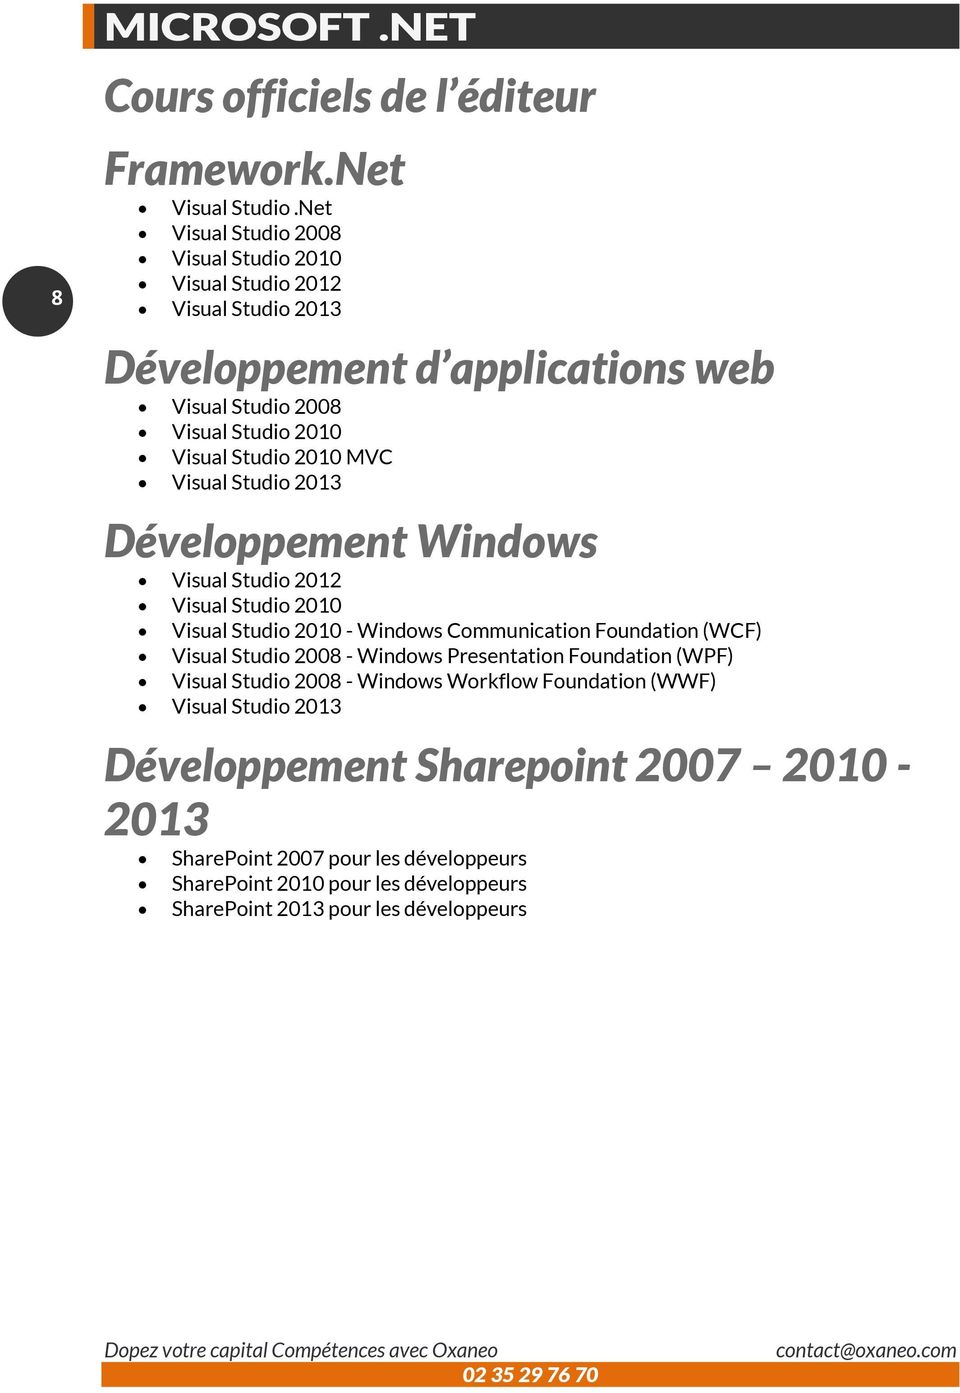 2010 MVC Visual Studio 2013 Développement Windows Visual Studio 2012 Visual Studio 2010 Visual Studio 2010 - Windows Communication Foundation (WCF) Visual Studio